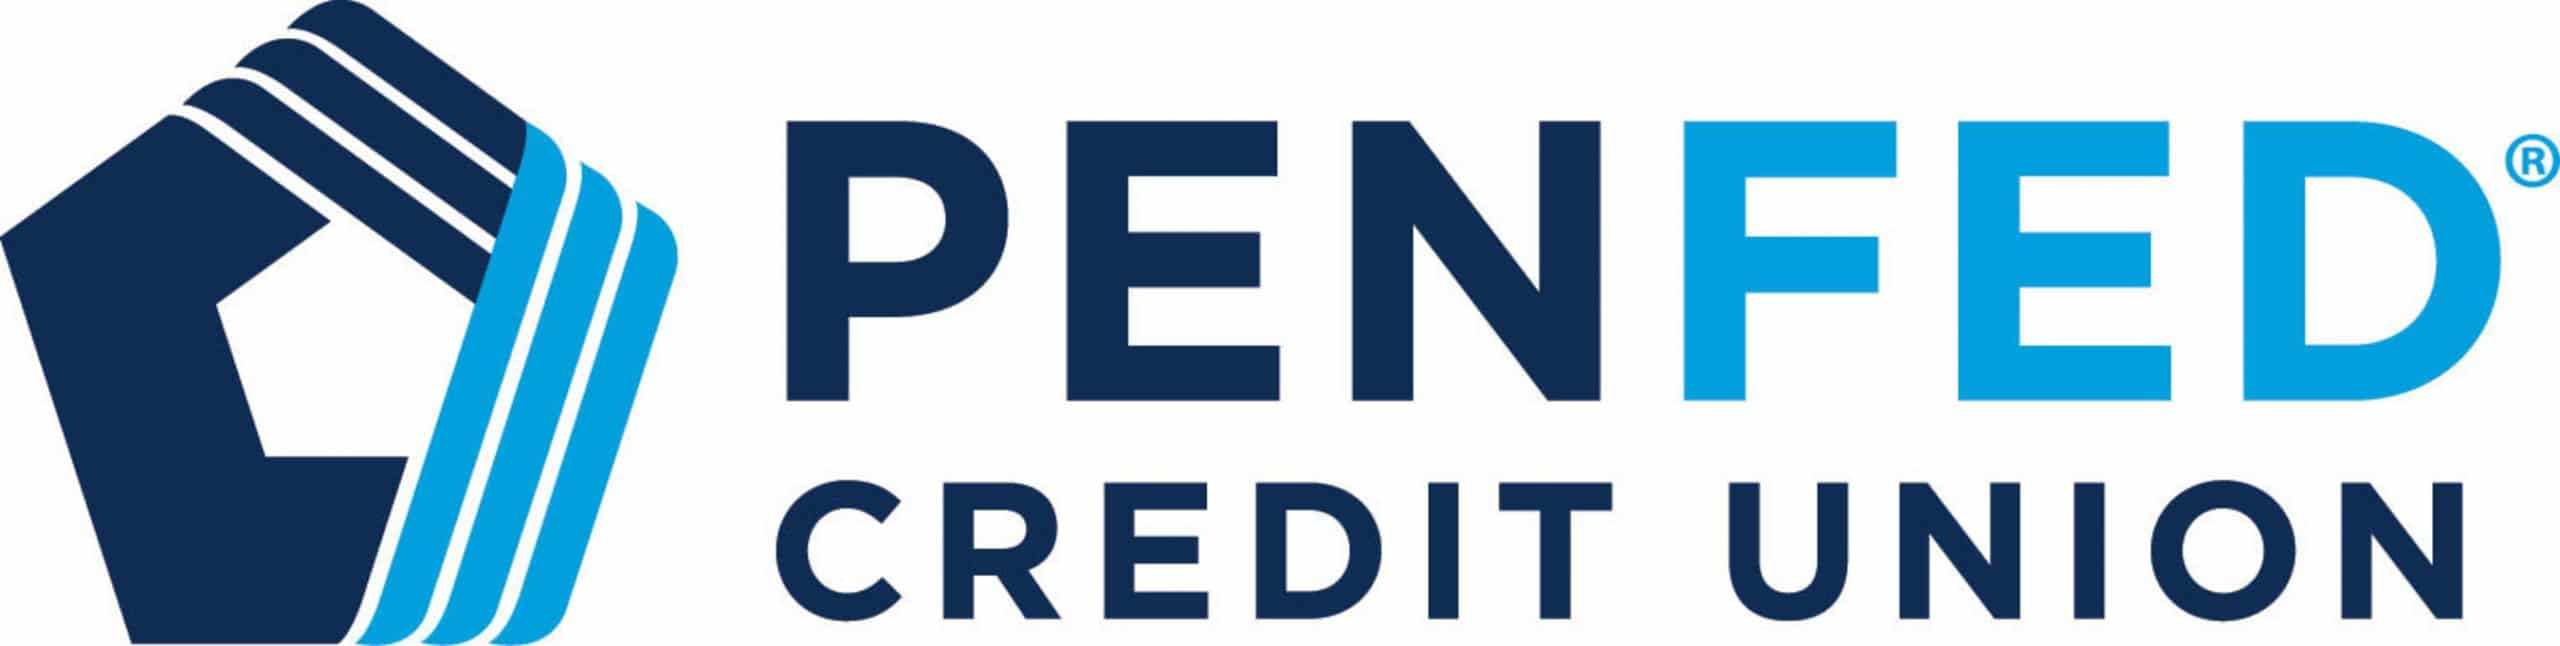 PenFed Credit Union logo